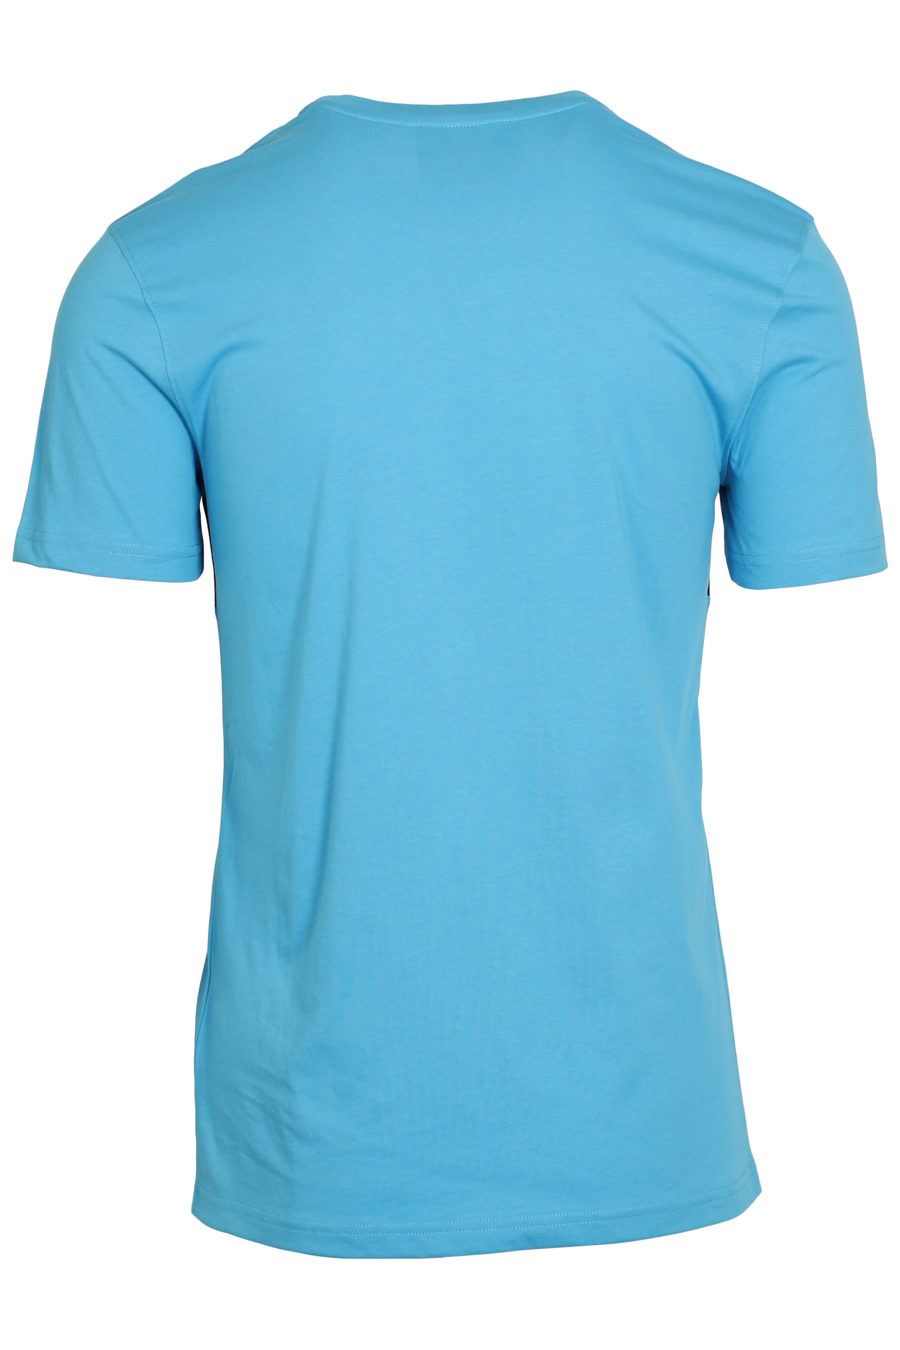 Camiseta azul logo blanco y negro - IMG 1005